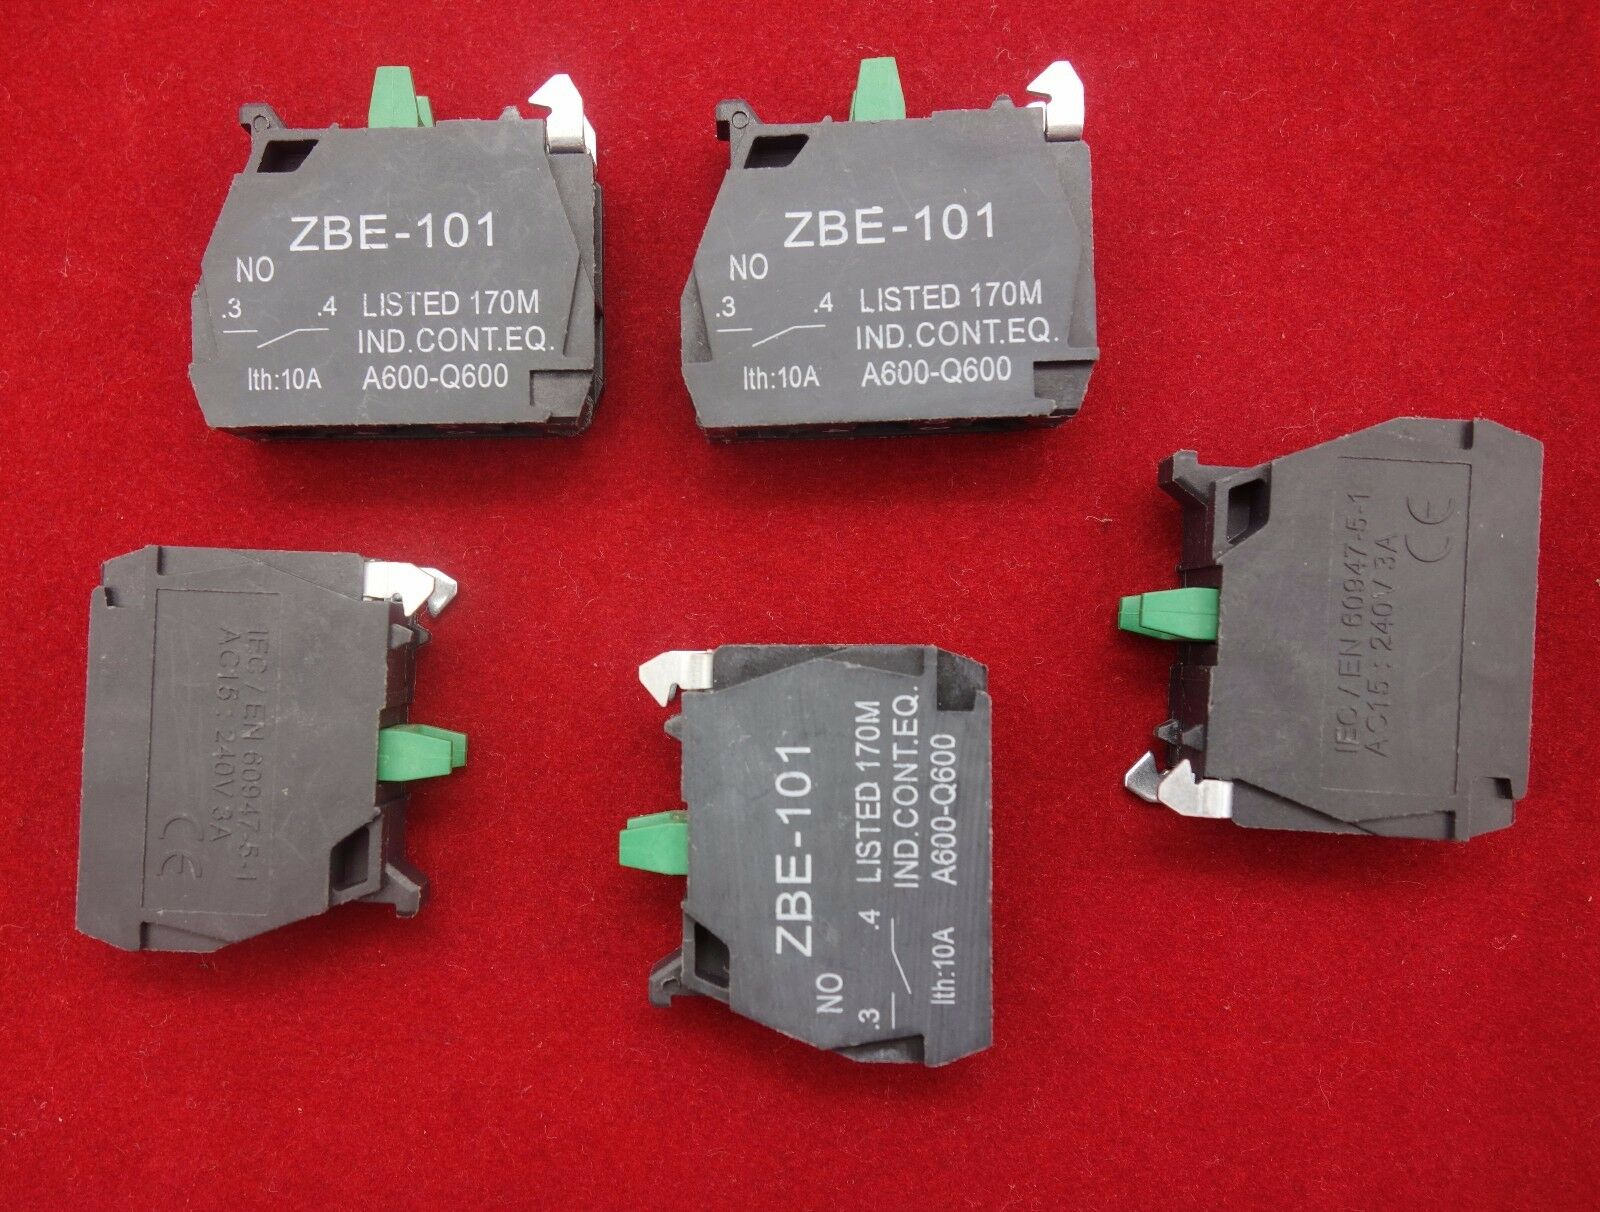 5PCS ZBE-101 N/O CONTACT BLOCK FITS XB4 XB5 Series Products